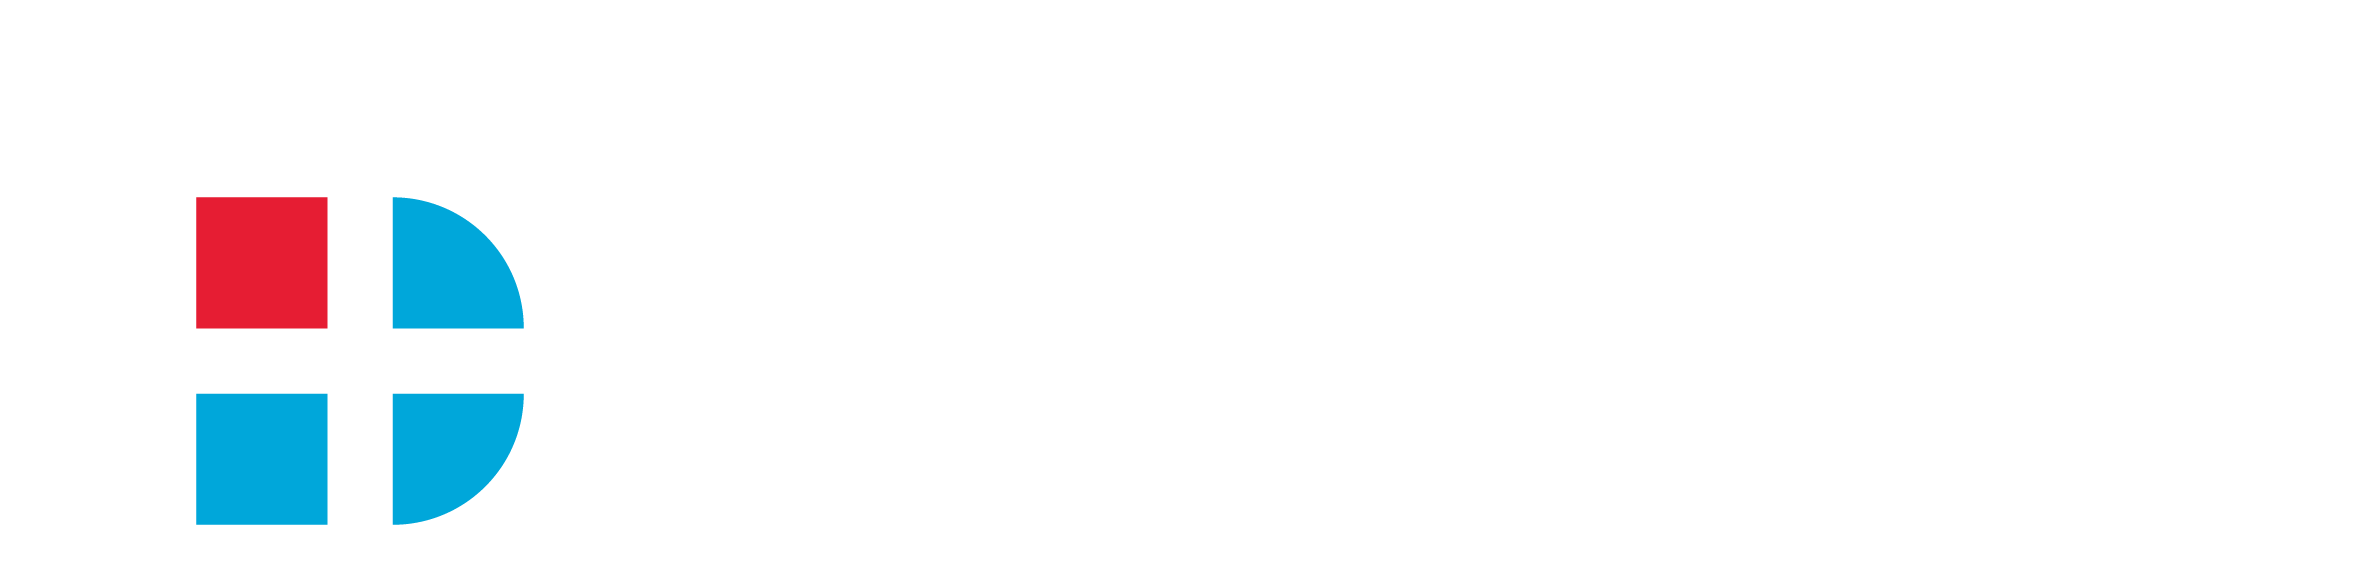 sean doyle scaffolding logo